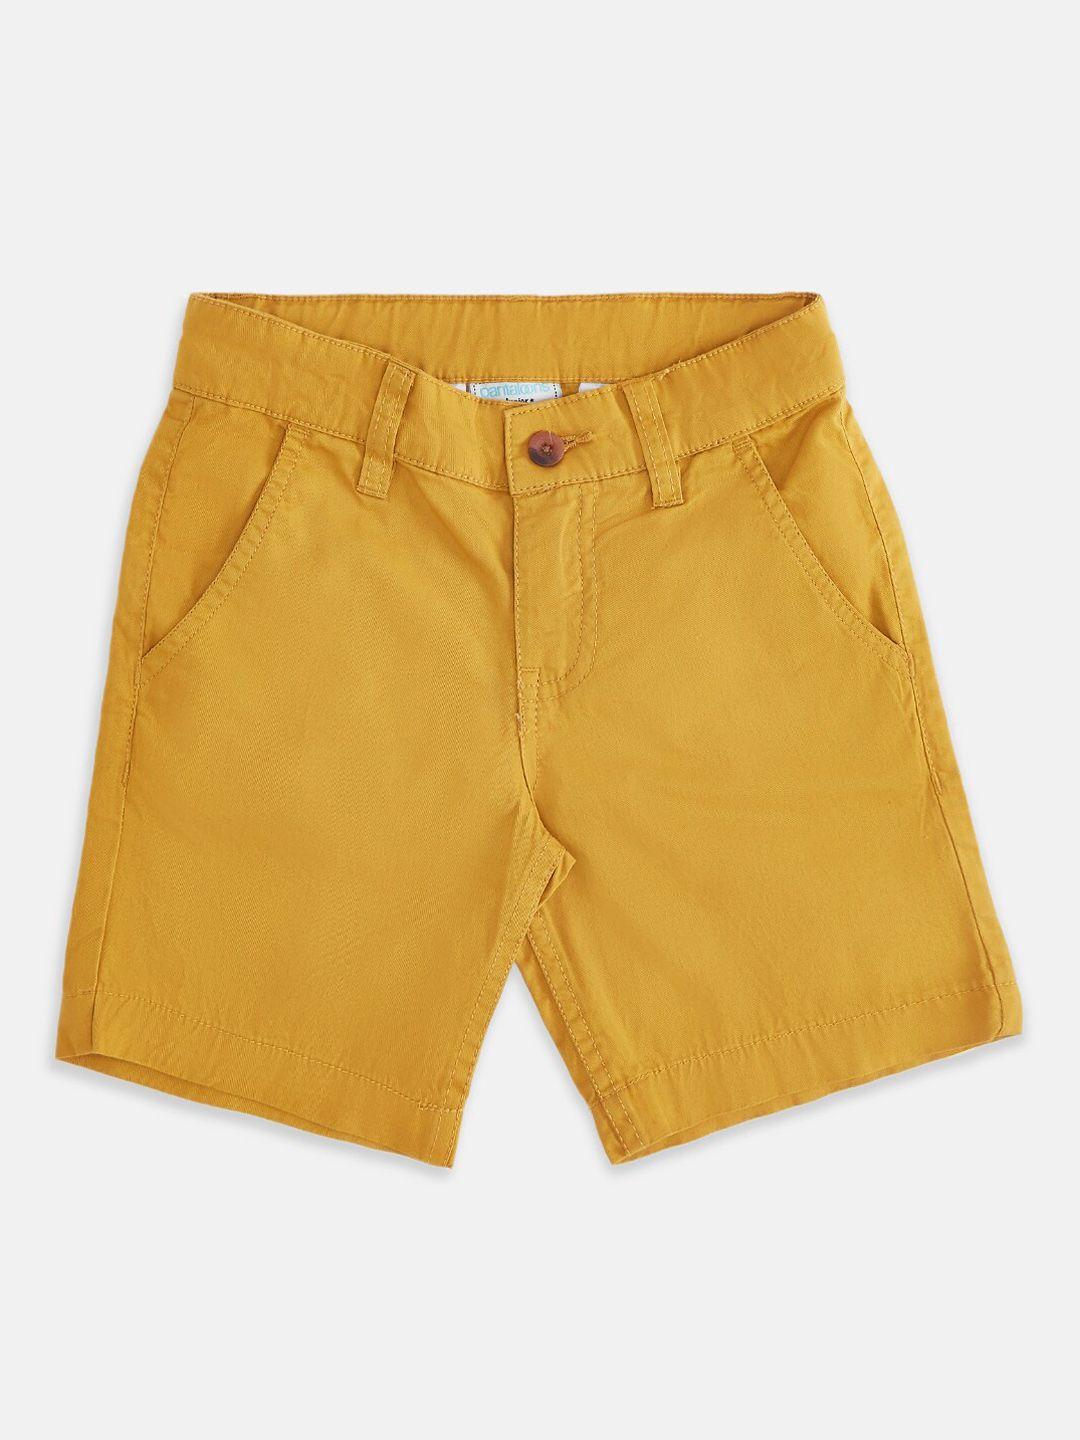 pantaloons-junior-boys-gold-toned-cotton-shorts